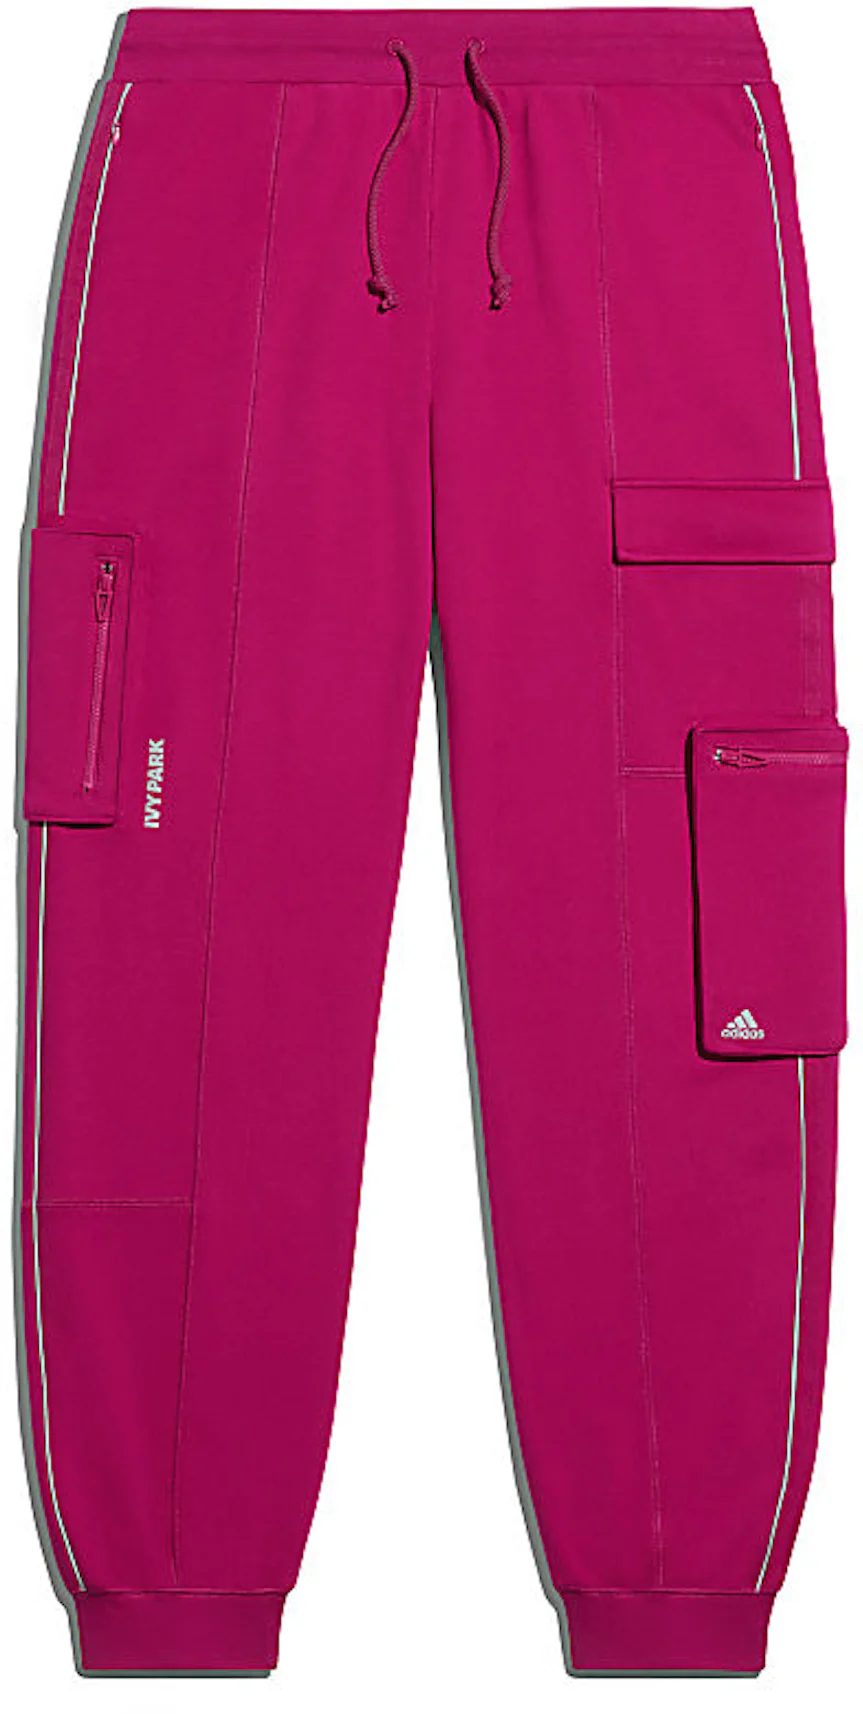 Adidas X Ivy park cargo hoodie bold pink all gender HD4821 sweatshirt size S